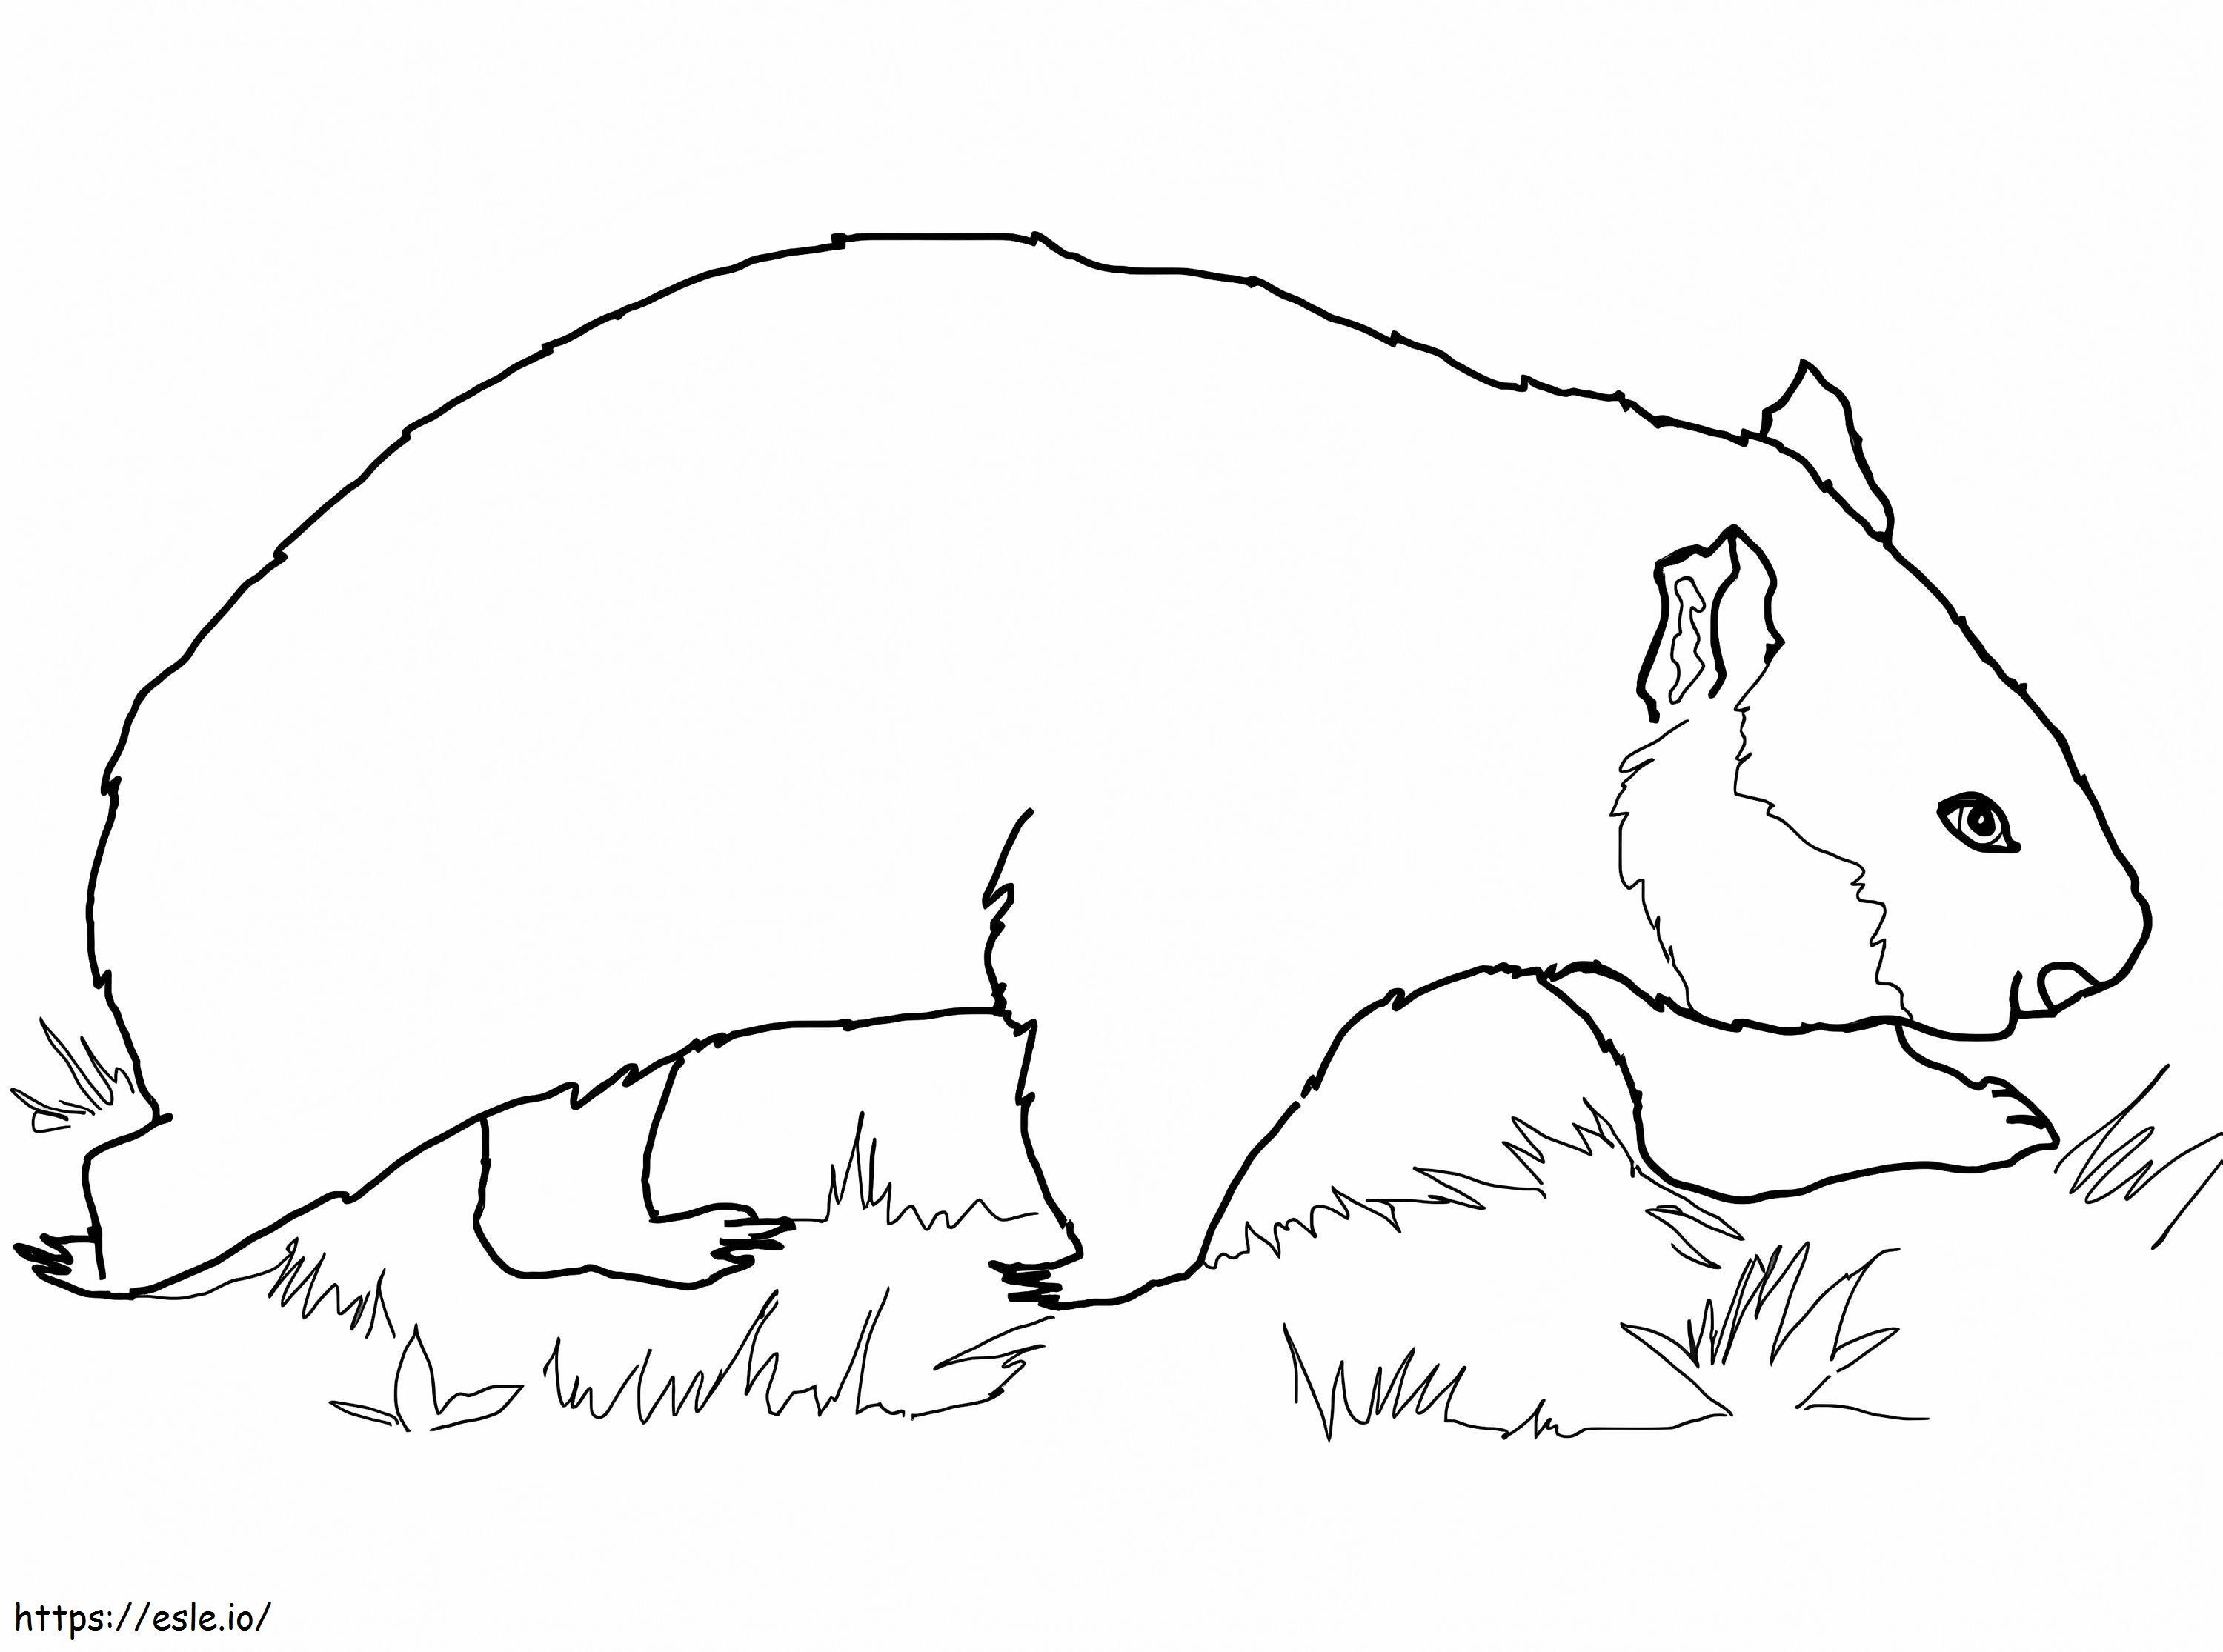 Wombat Walking coloring page